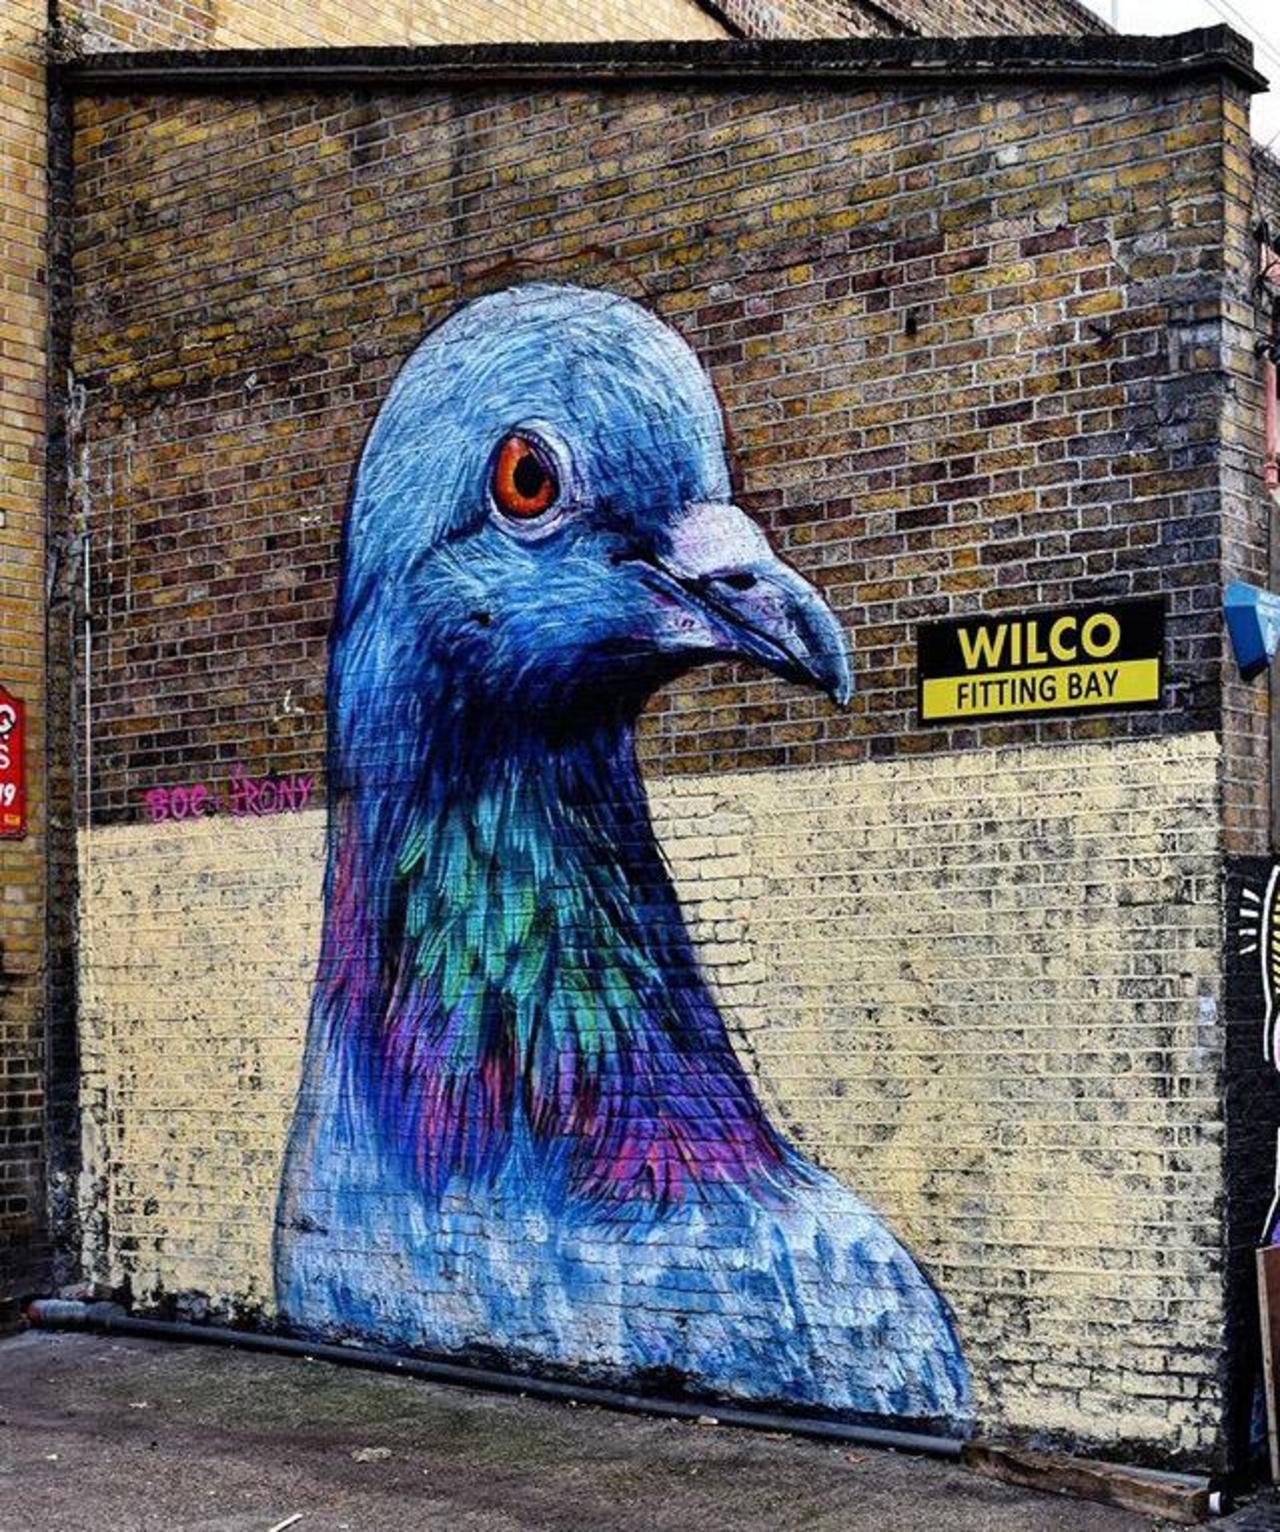 Street Art by Placee Boe & whoamirony in London 

#art #graffiti #mural #streetart http://t.co/AgP4oqMutm